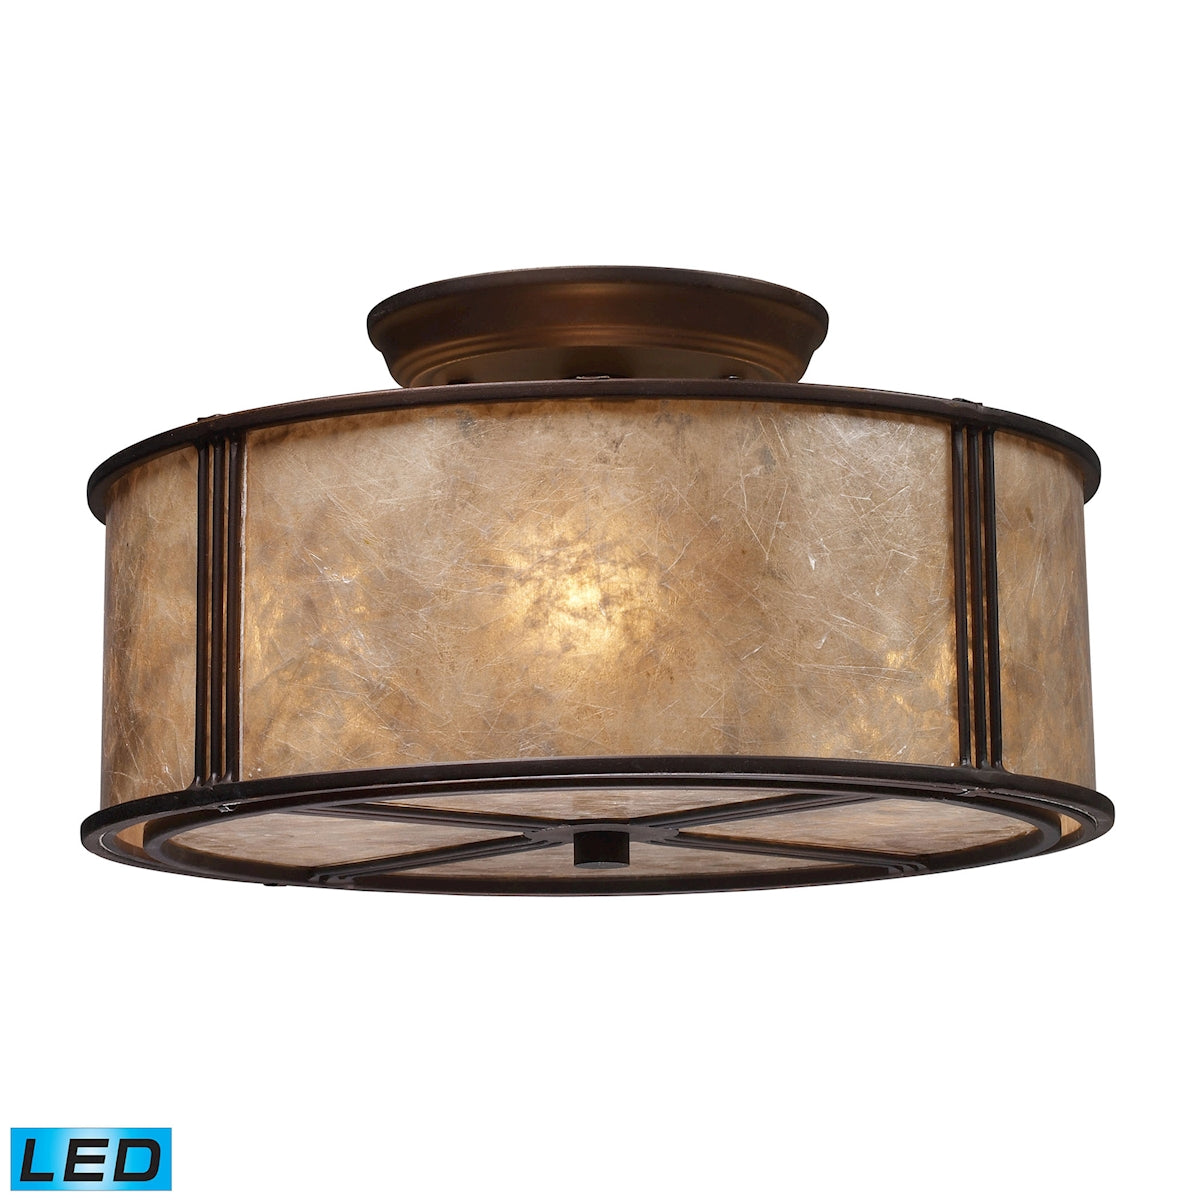 ELK Lighting 15031/3-LED Barringer 3-Light Semi Flush in Aged Bronze with Tan Mica Shade - Includes LED Bulbs